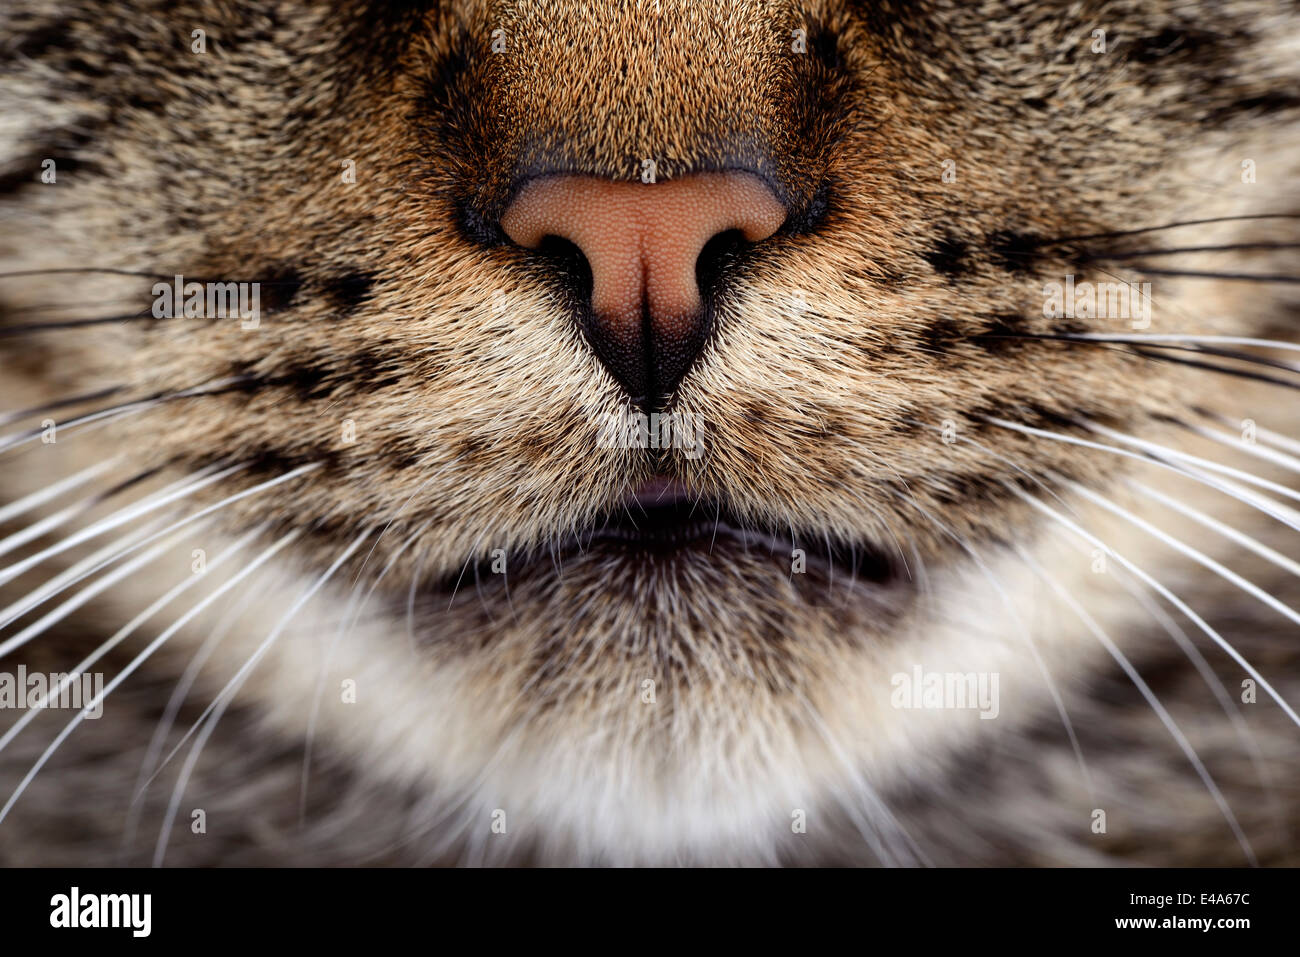 Snout of tabby cat, Felis silvestris catus Stock Photo